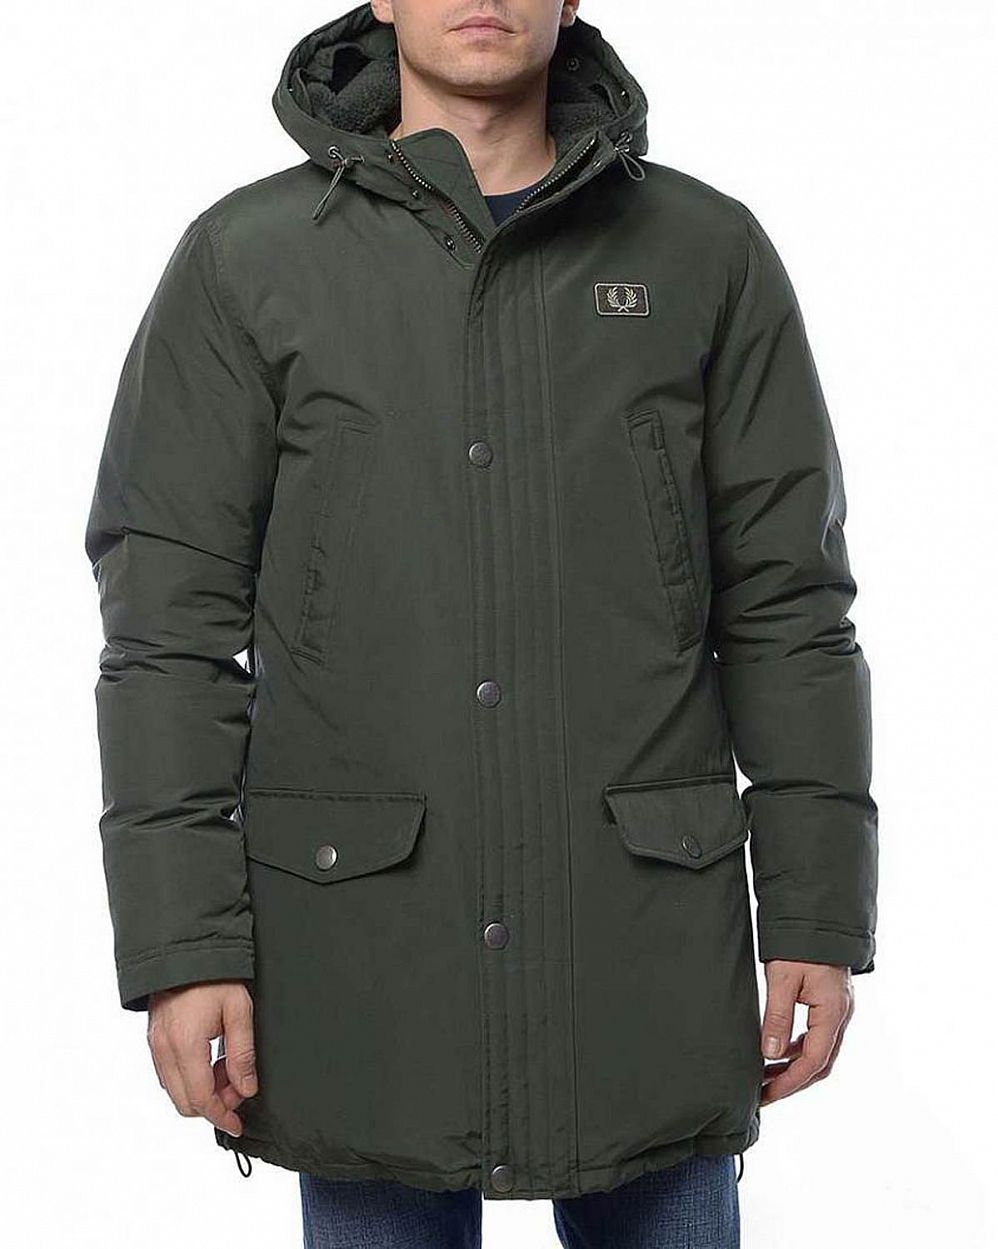 Green Hooded Coat (3056781)